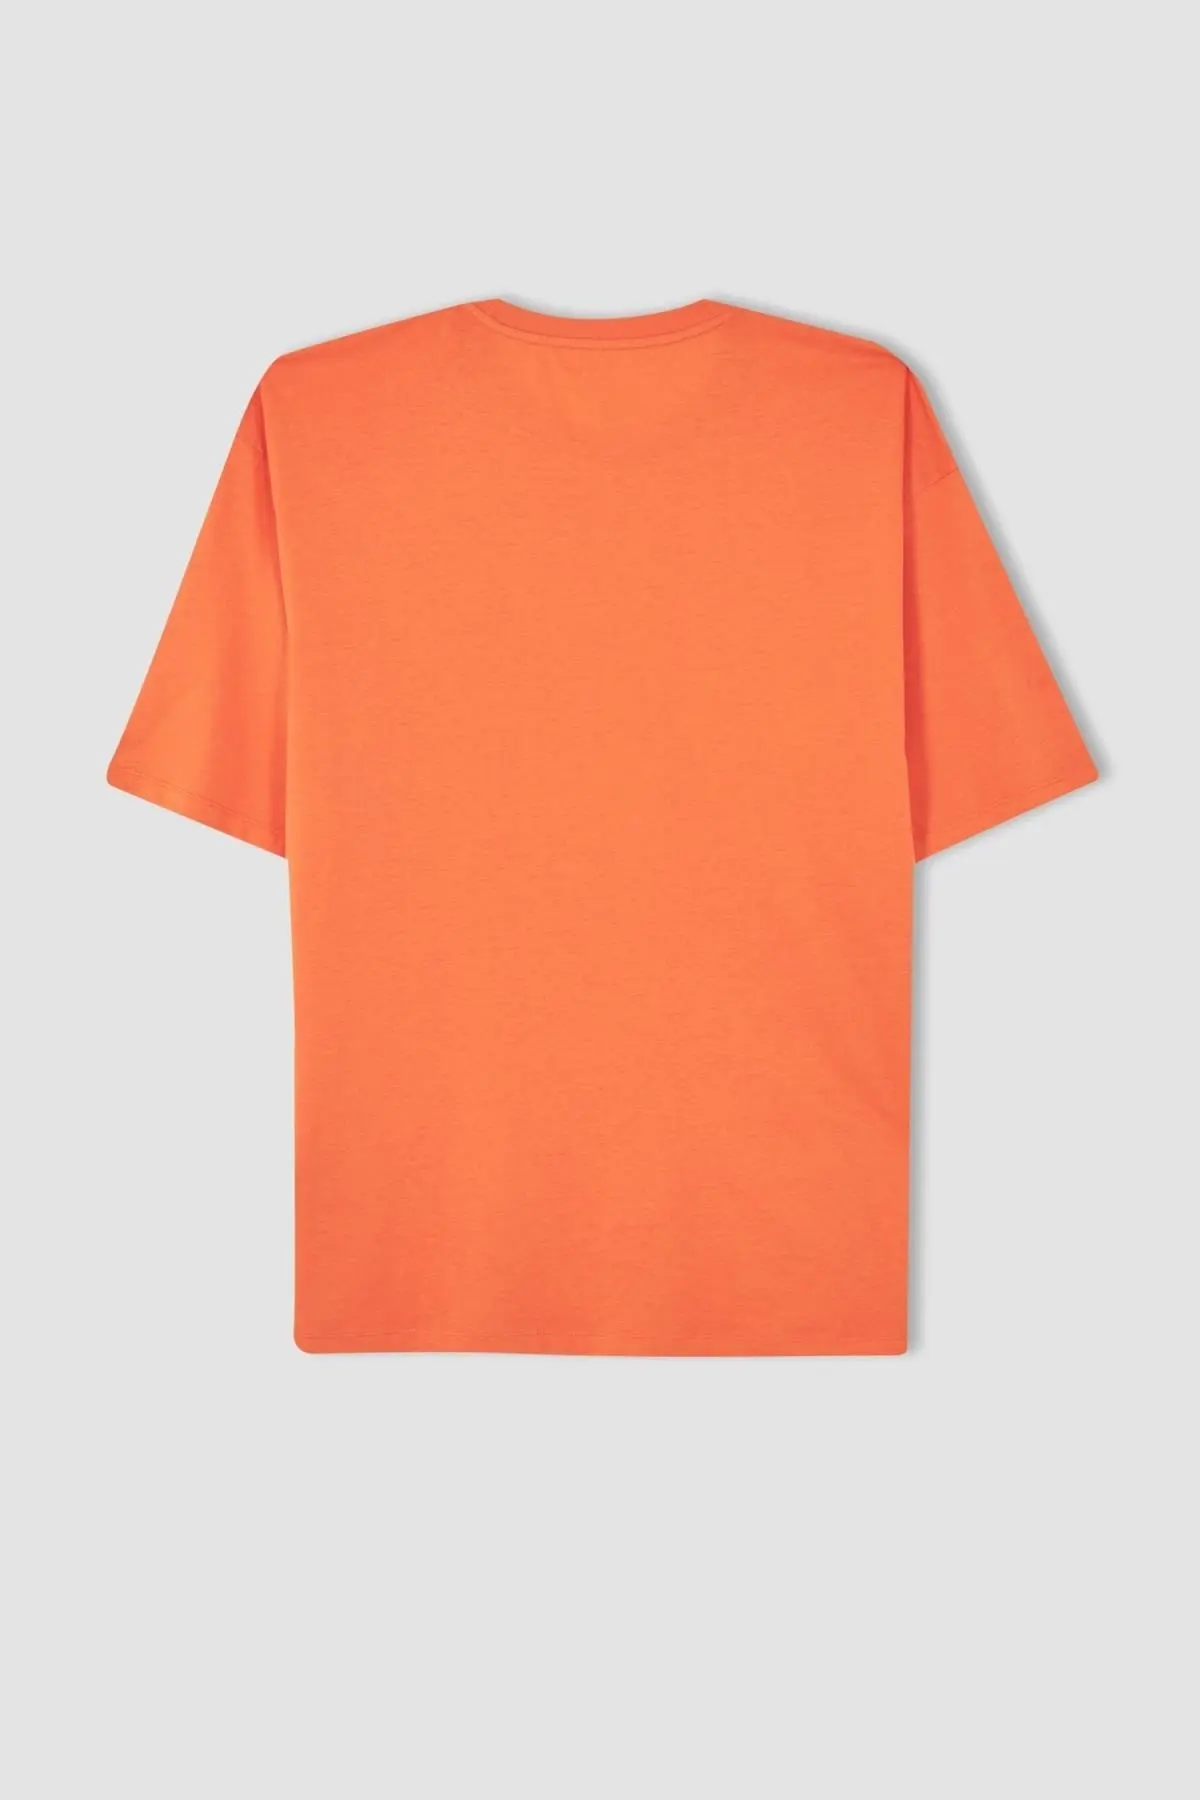 تیشرت اور سایز تک جیب مردانه نارنجی برند Defacto 